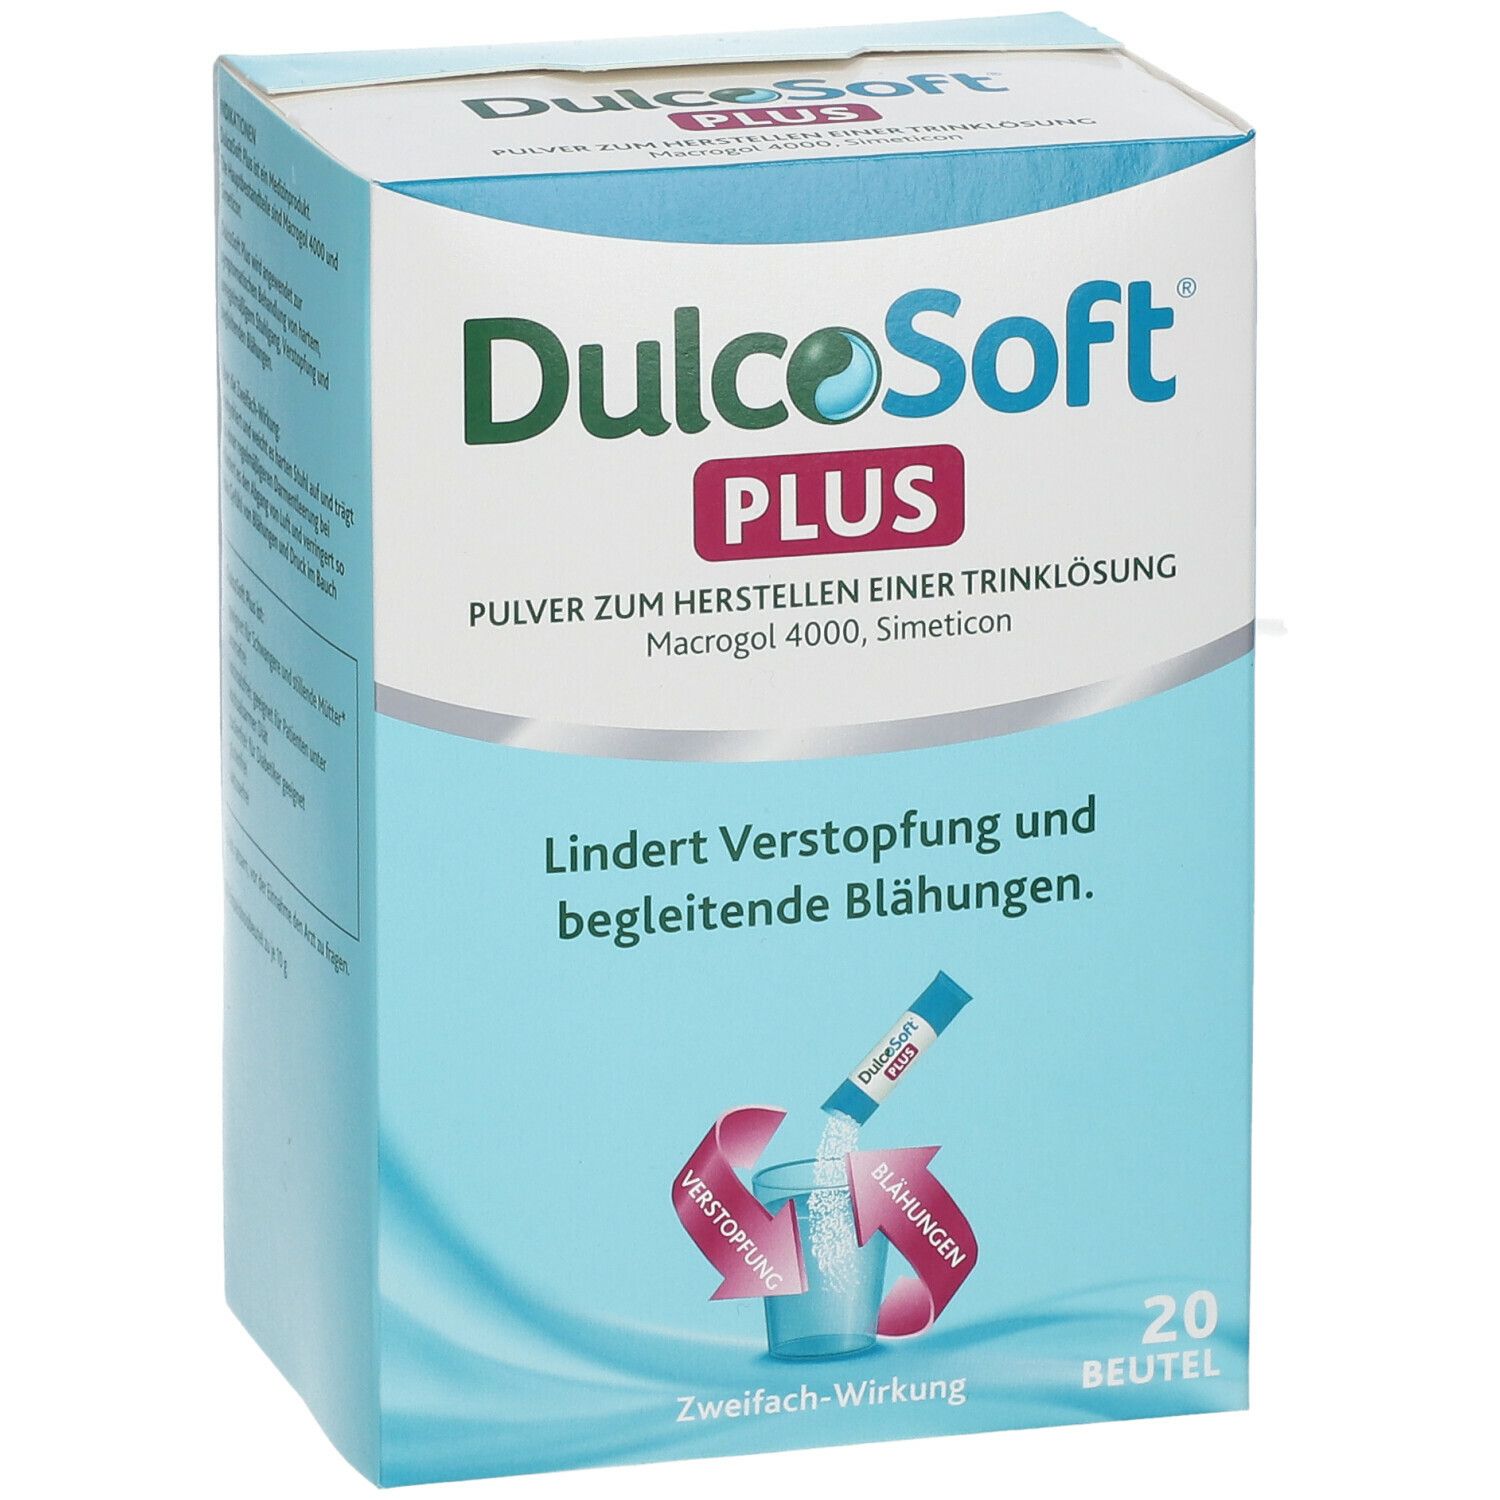 DulcoSoft® Plus mit Macrogol und Simeticon